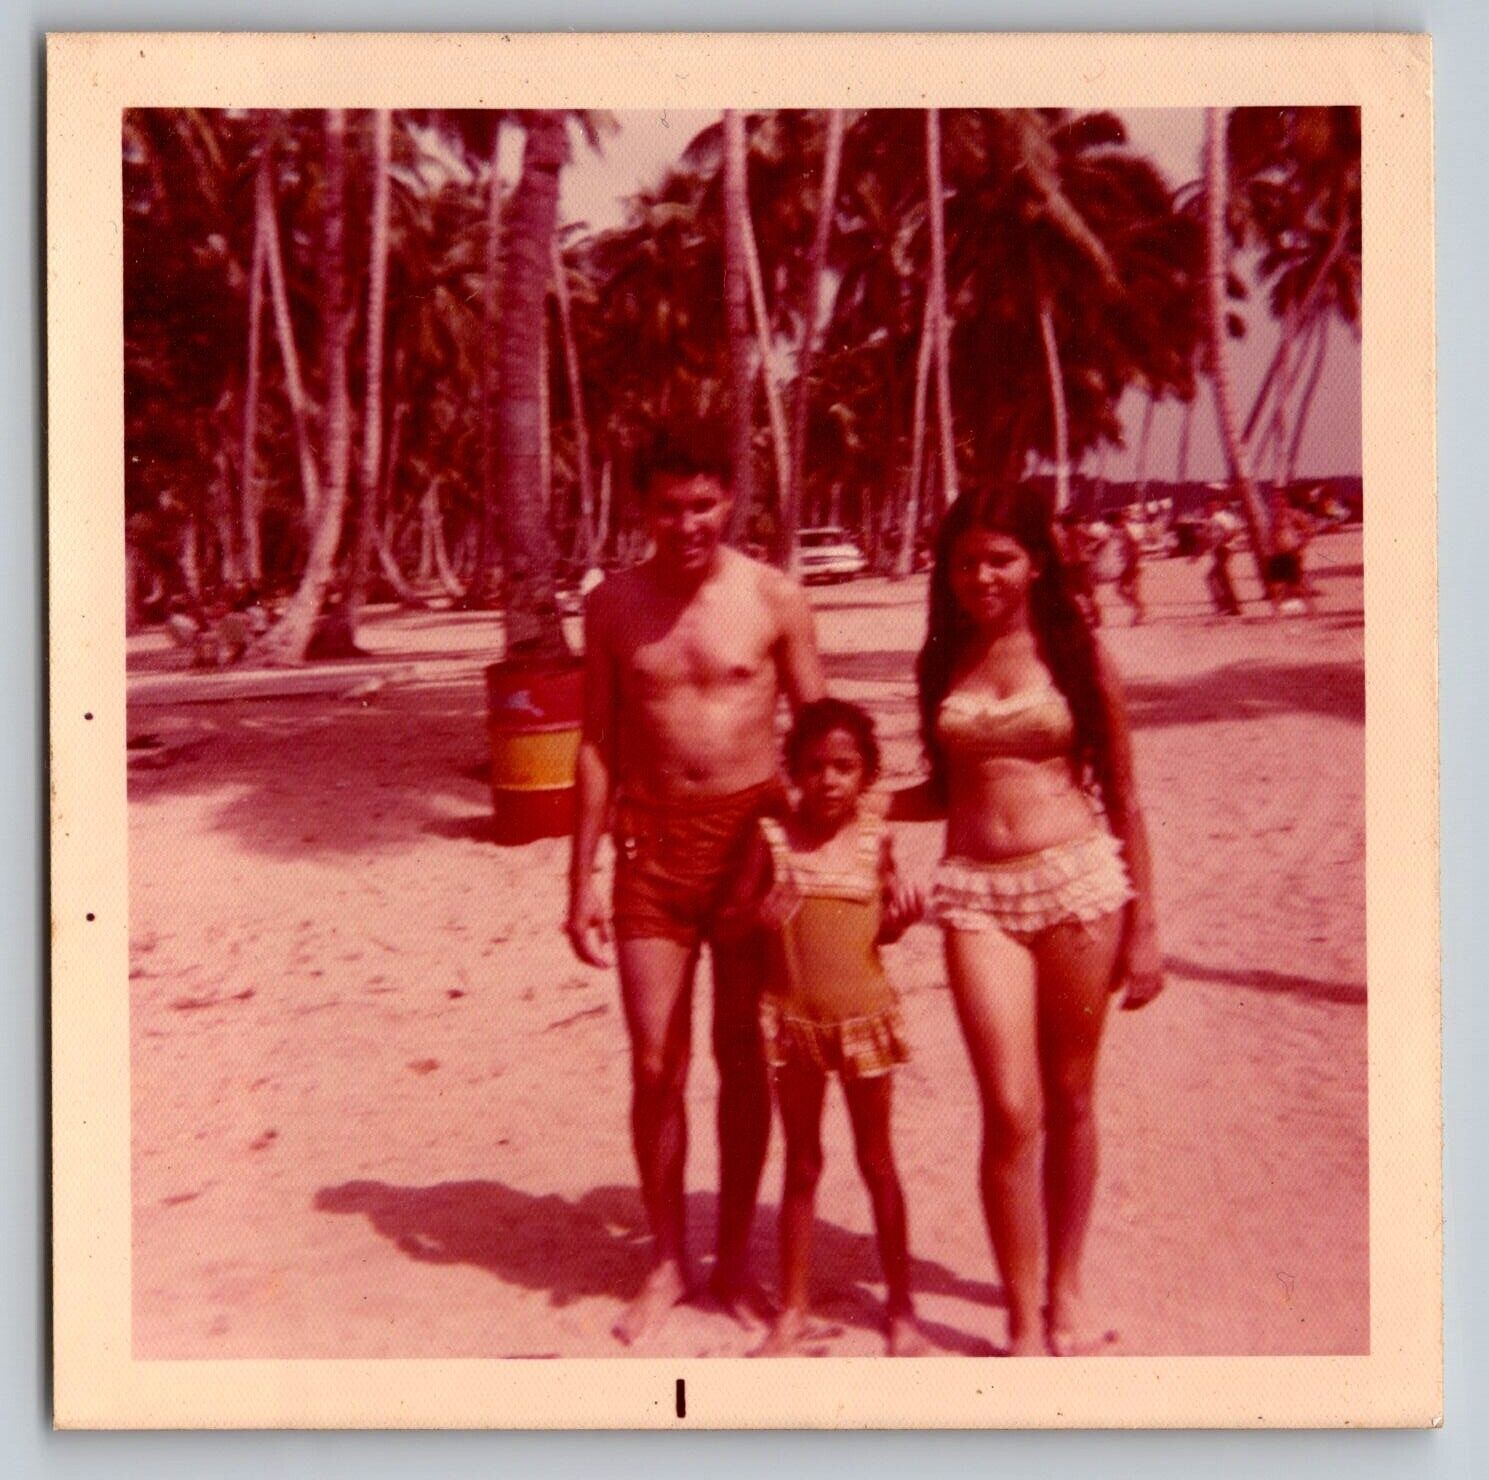 Vintage 60's Kodak Photo Stunning Young Cuban Lady in Bikini Classic Retro Beach